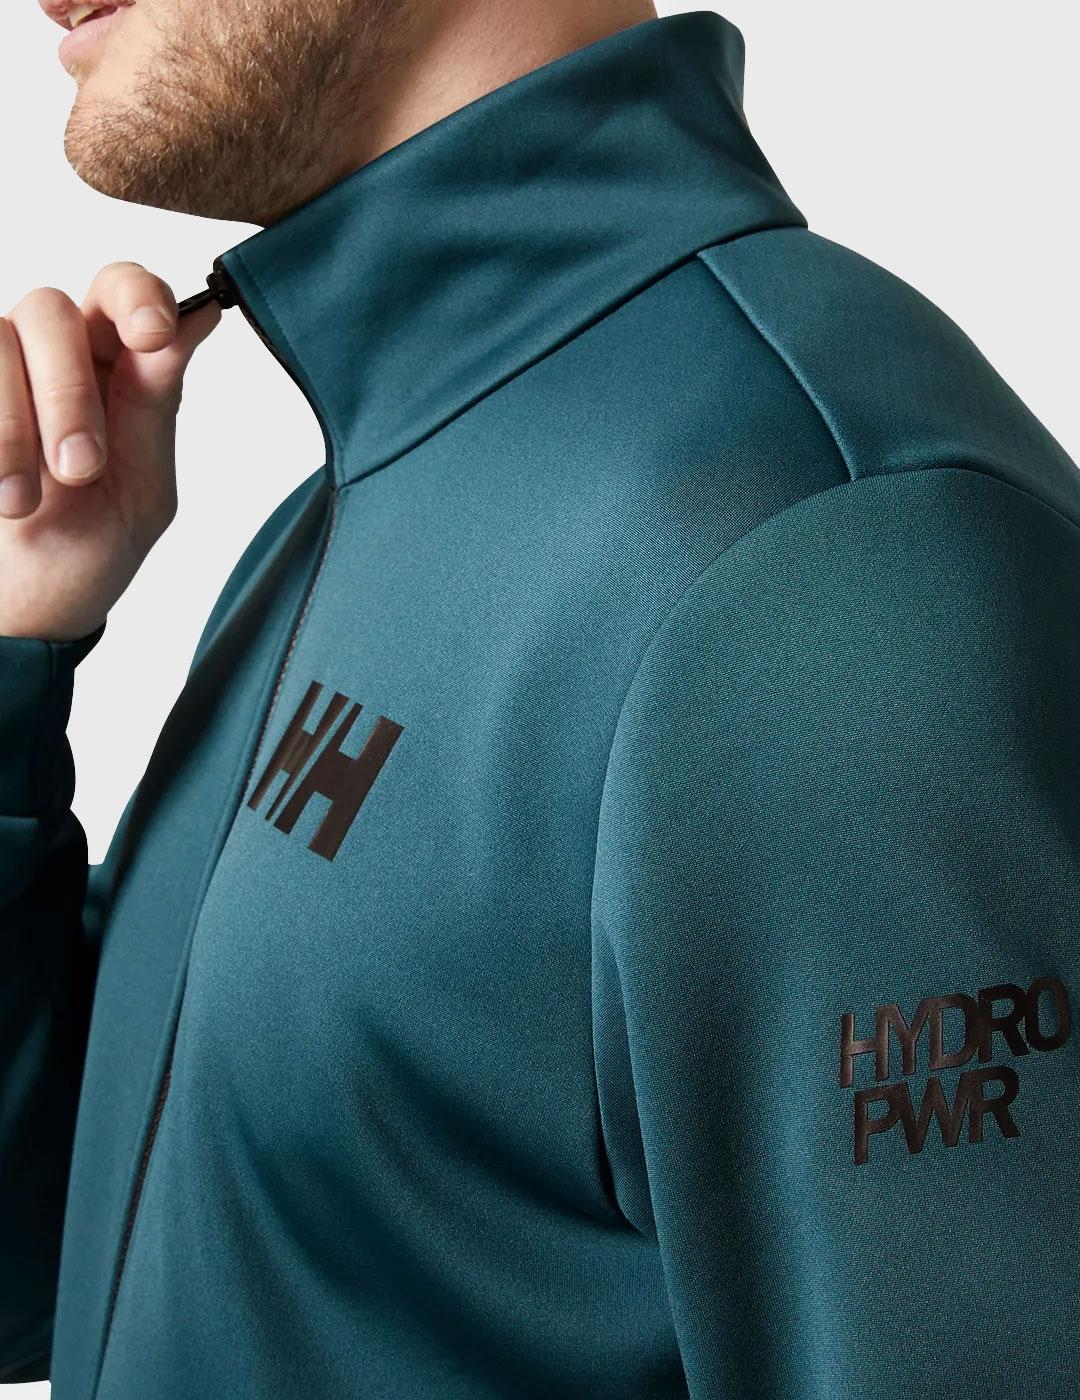 Helly Hansen HP Fleece Jacket 2.0 Chaqueta verde para hombre